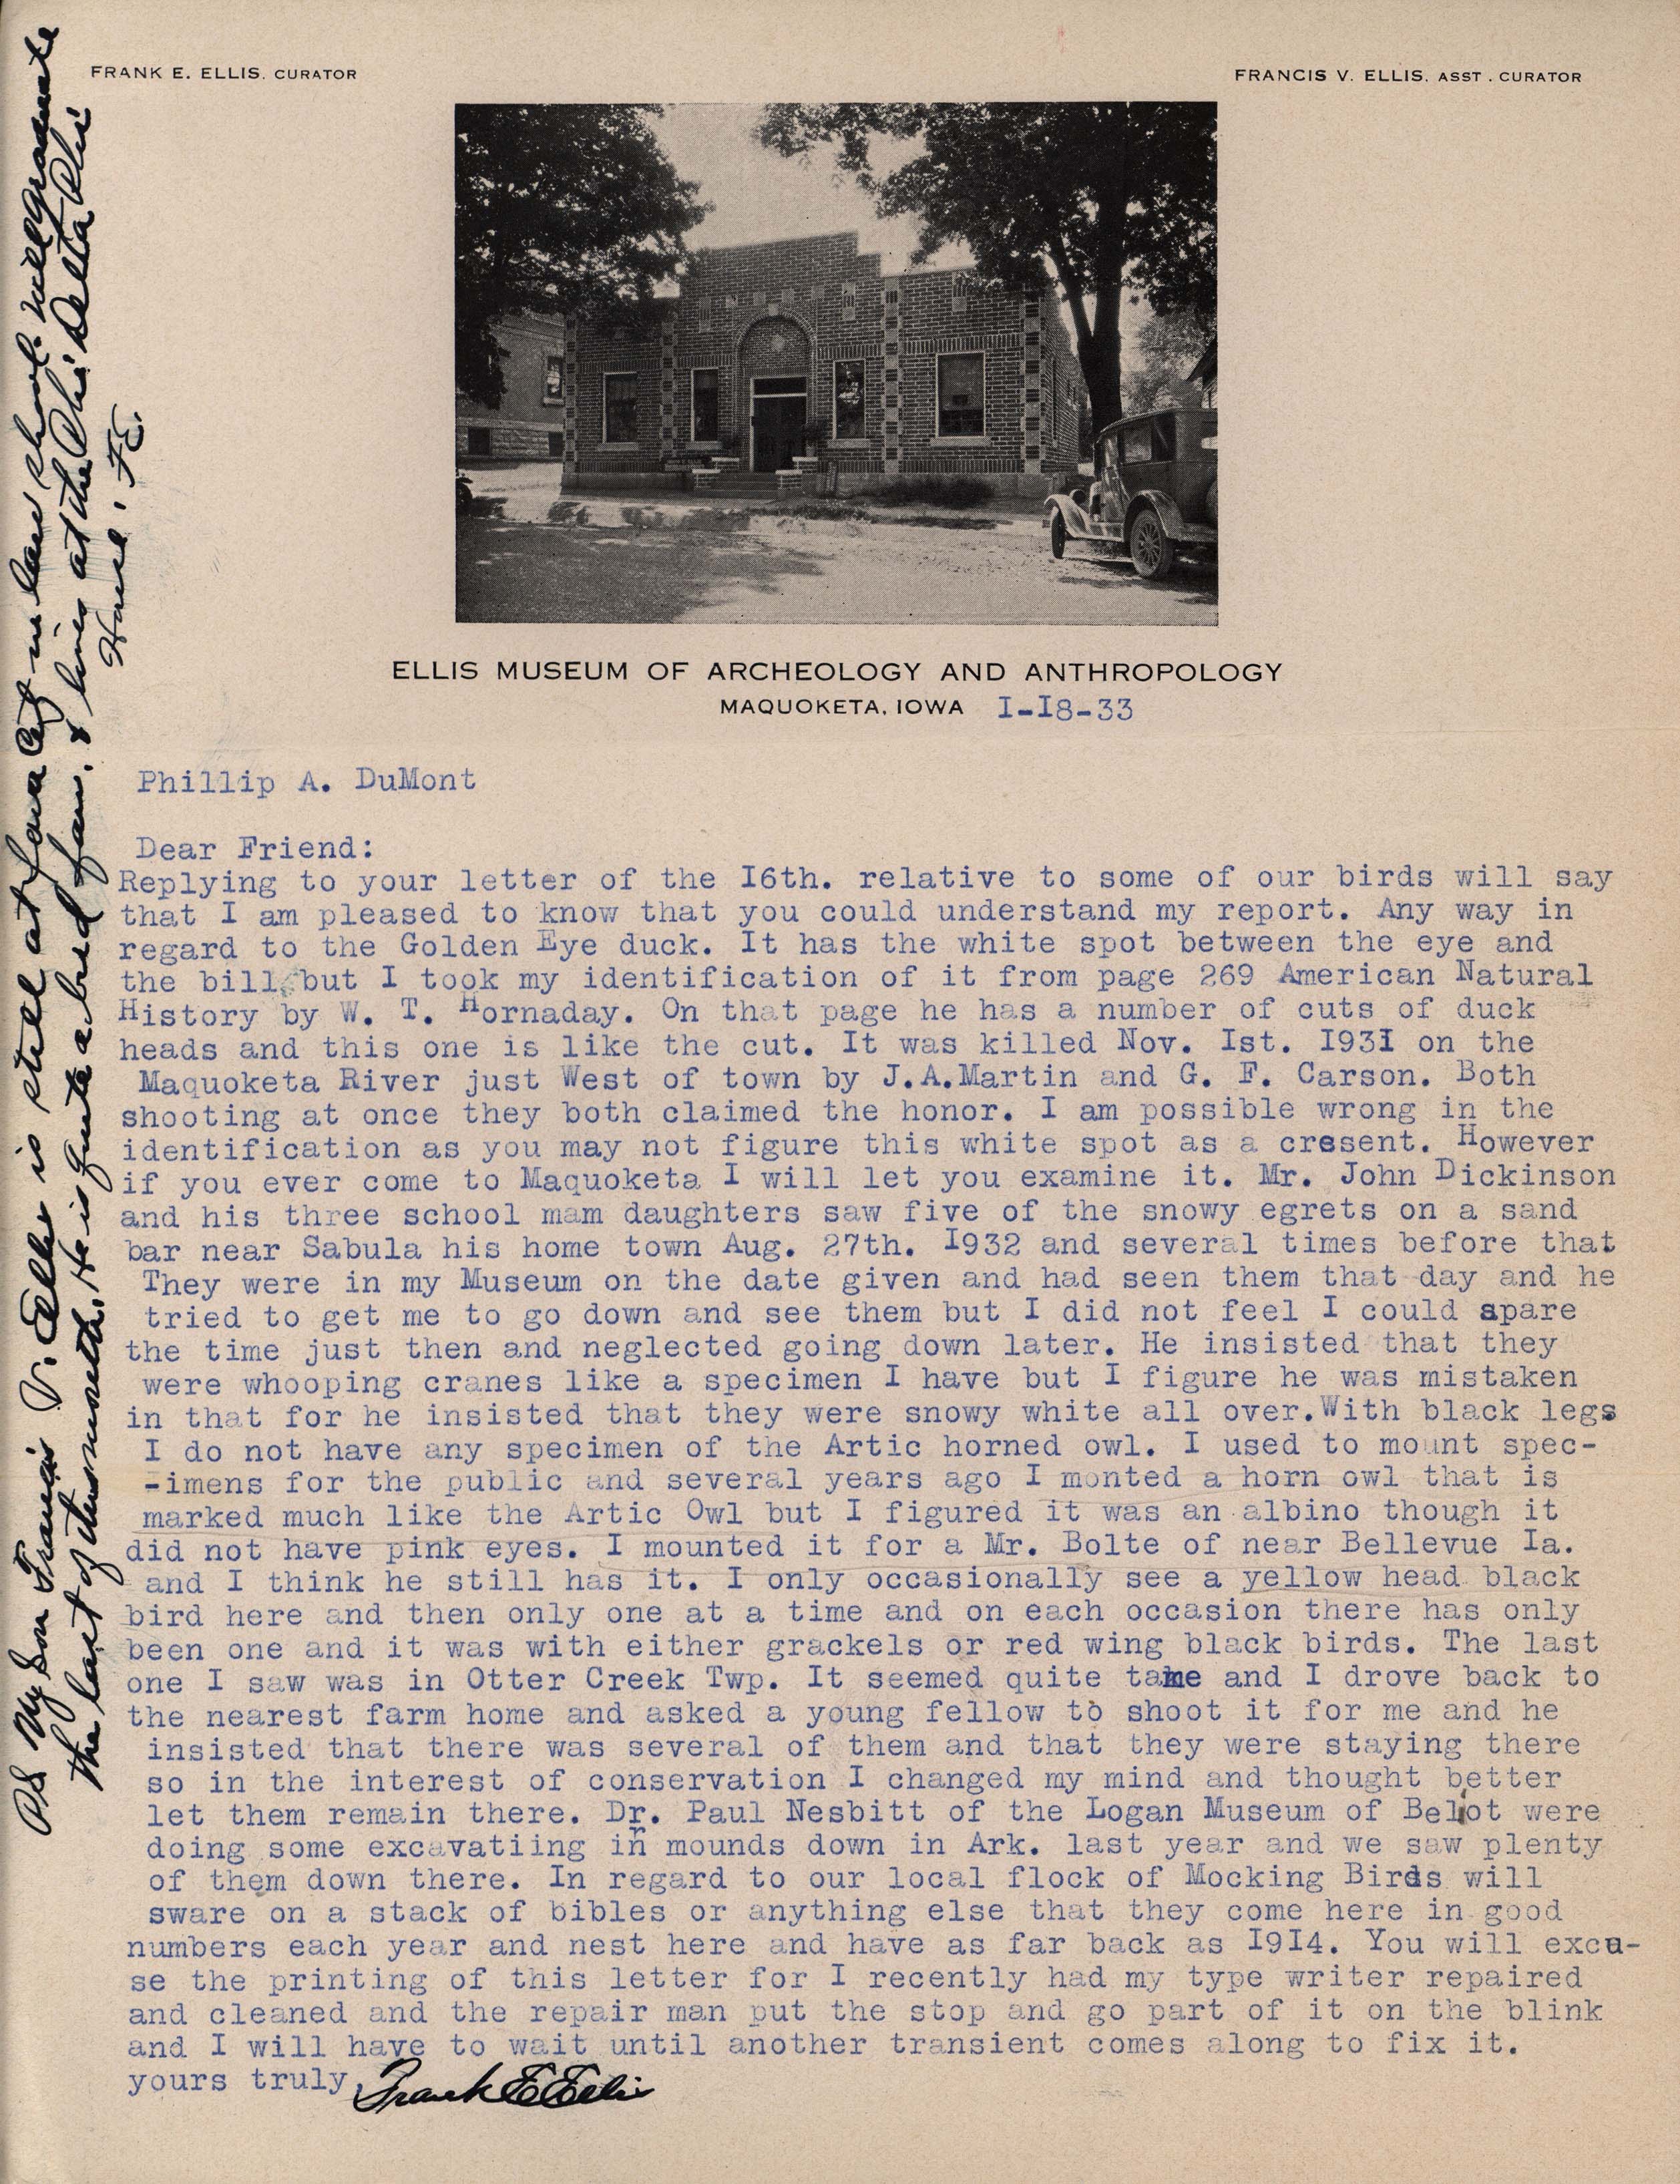 Frank Ellis letter to Philip DuMont regarding bird specimens and birds around Maquoketa, January 18, 1933